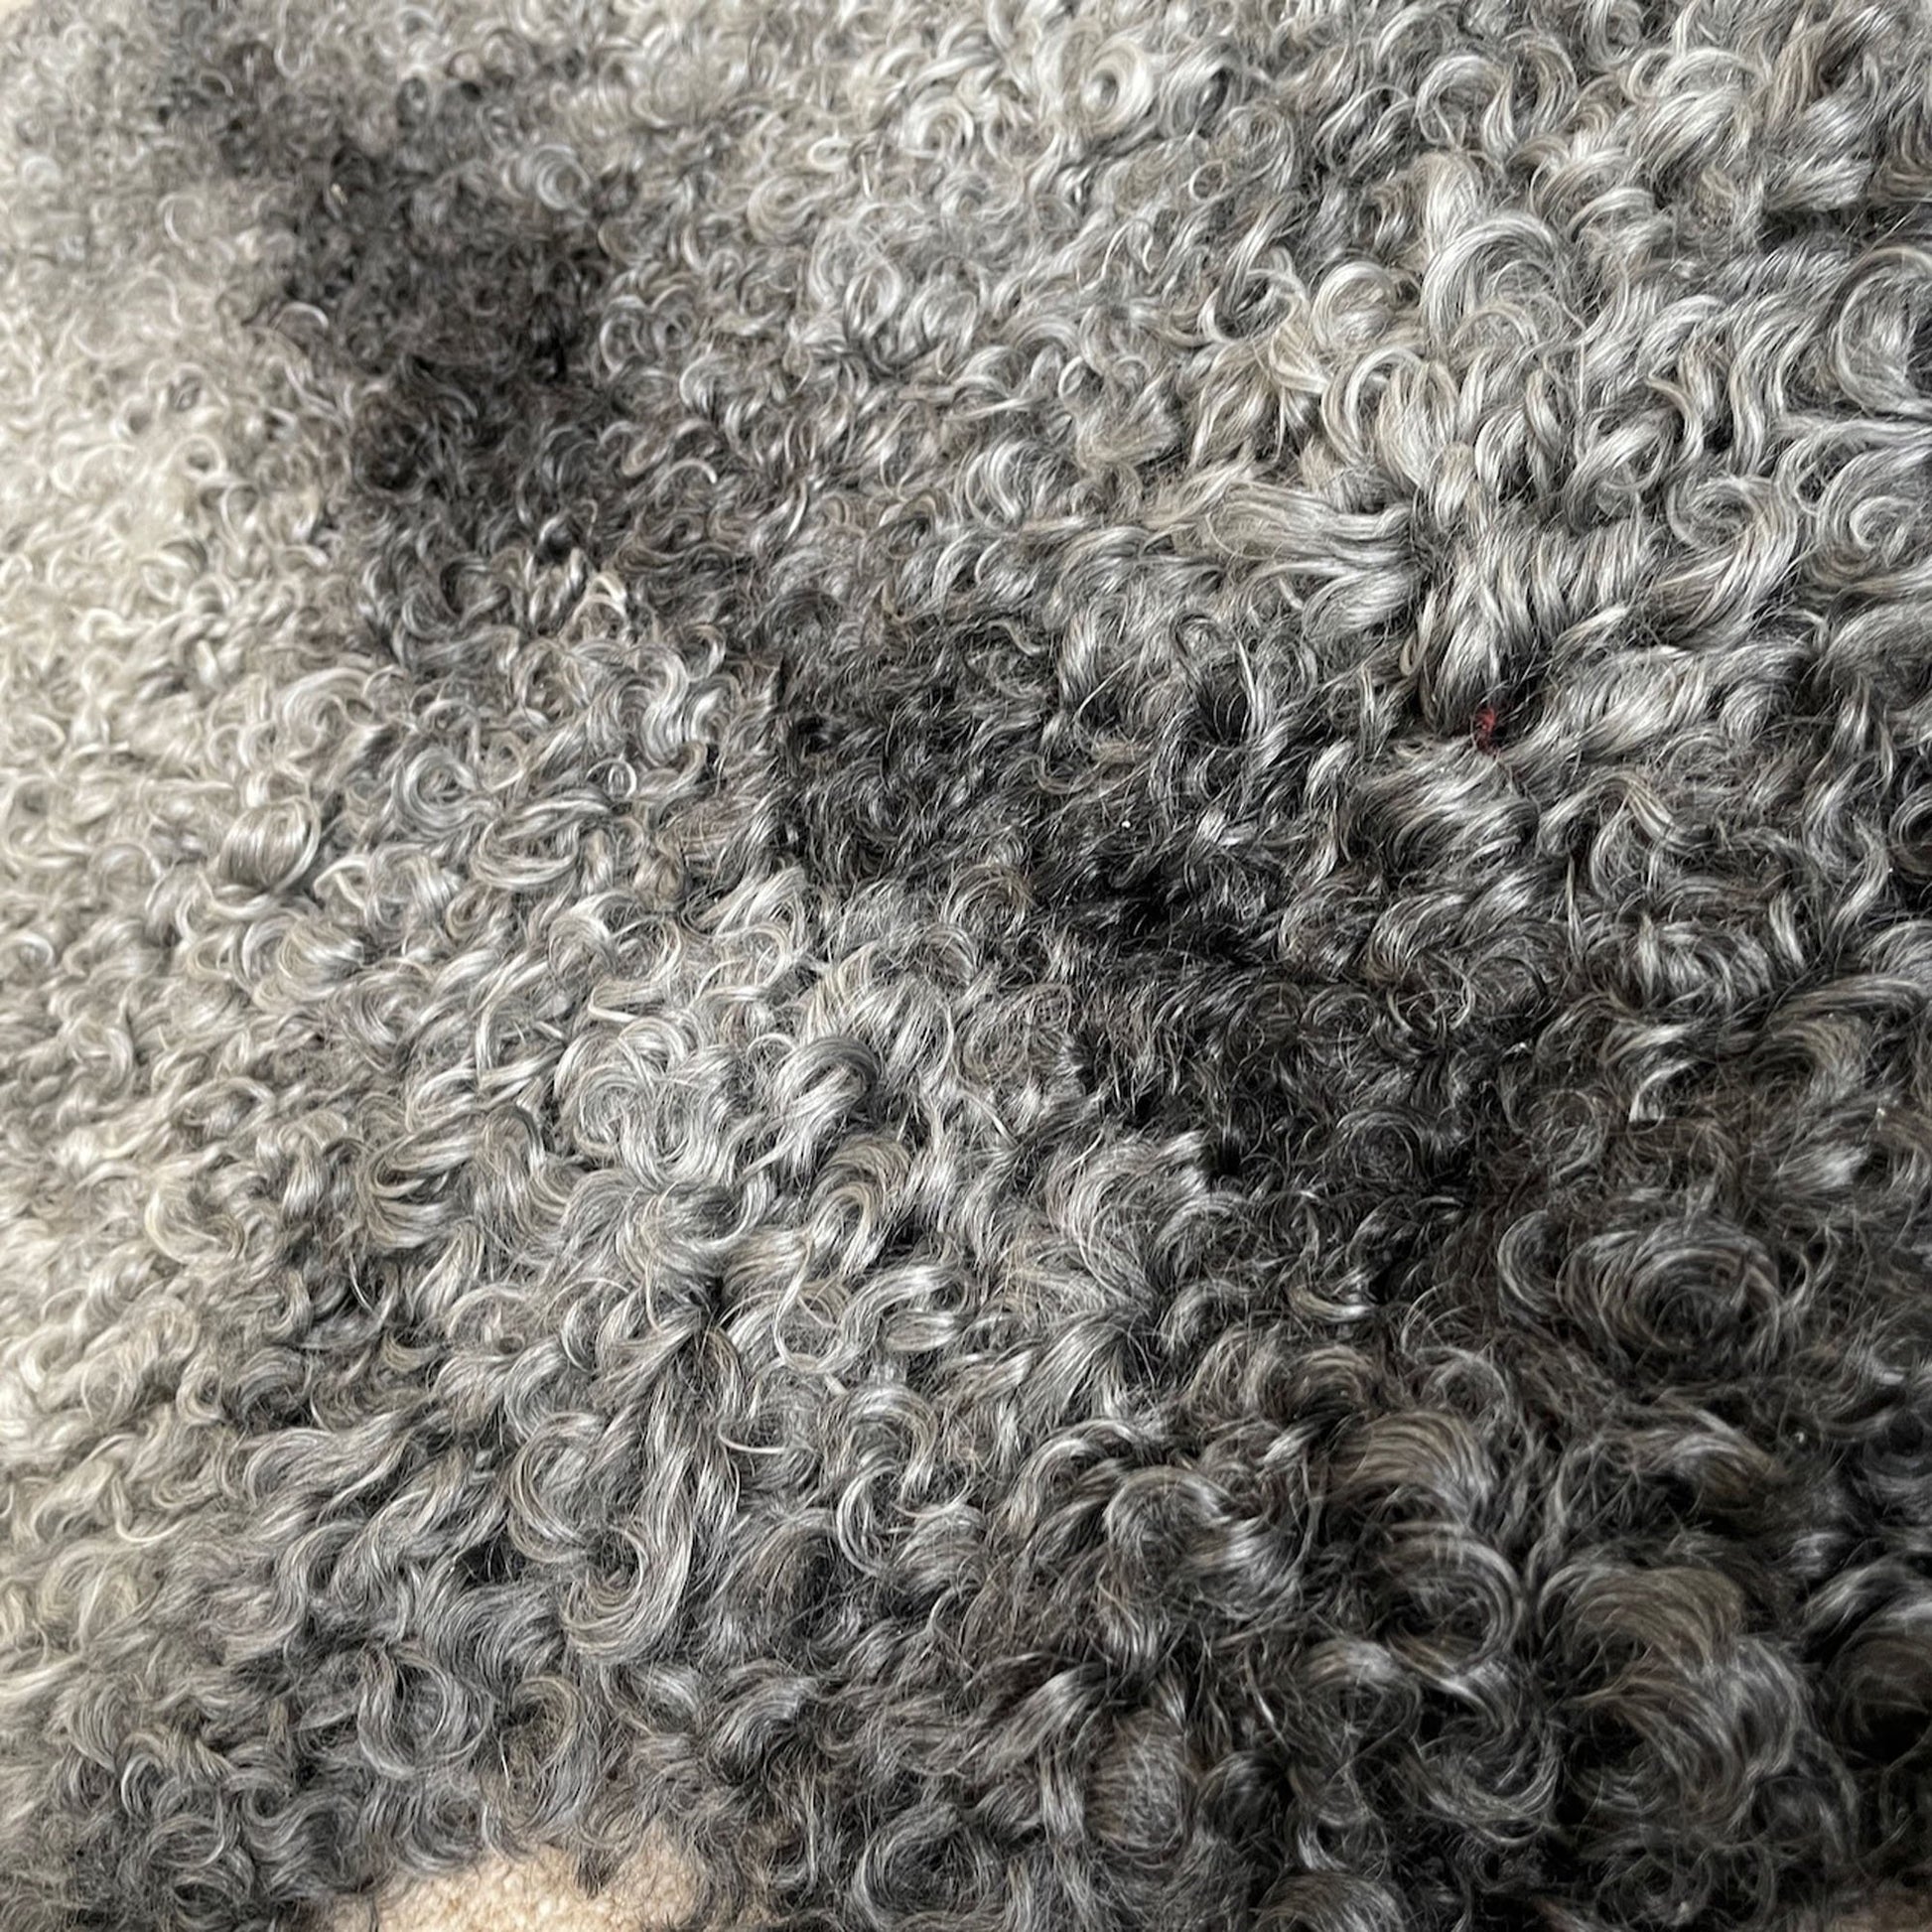 Gotland Rare Breed Sheepskin Natural Greys 0706GOTL12 - Wildash London